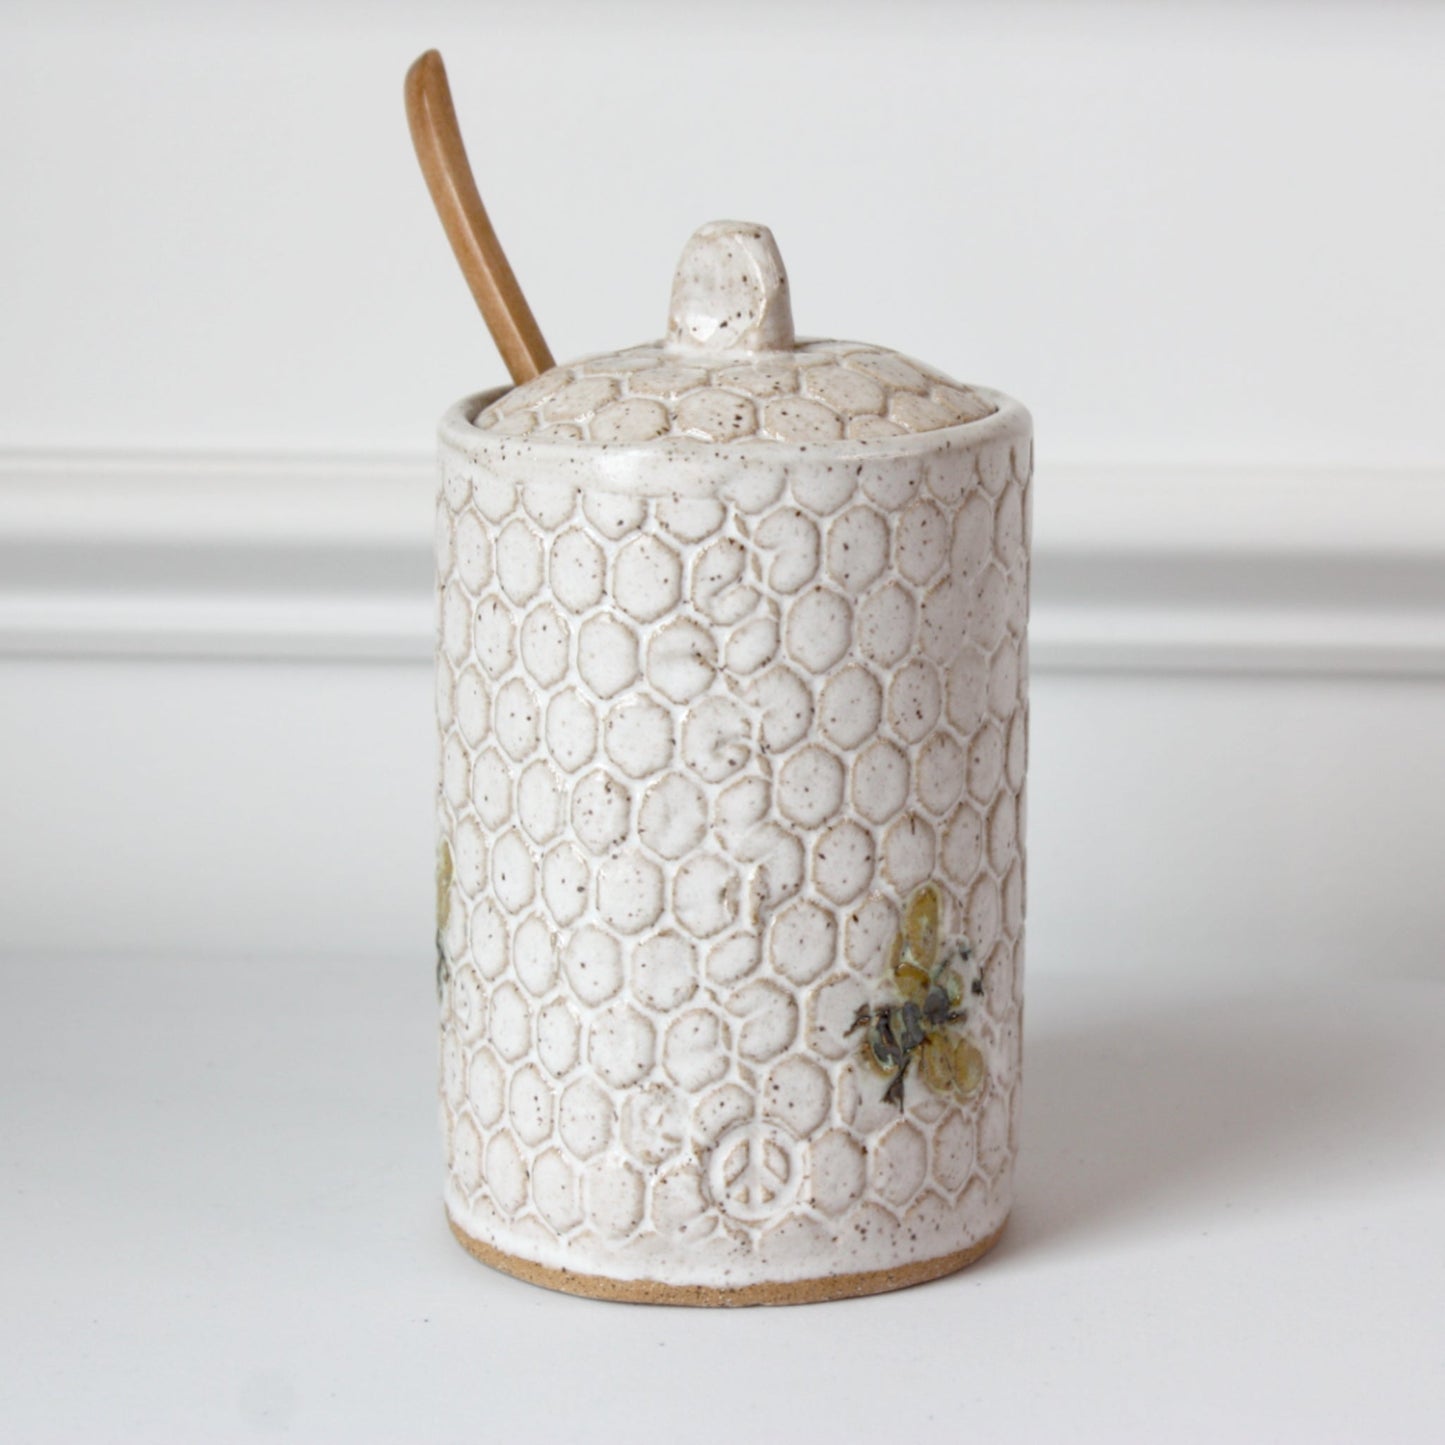 Bee Ceramic Honey Pot - Made in the USA